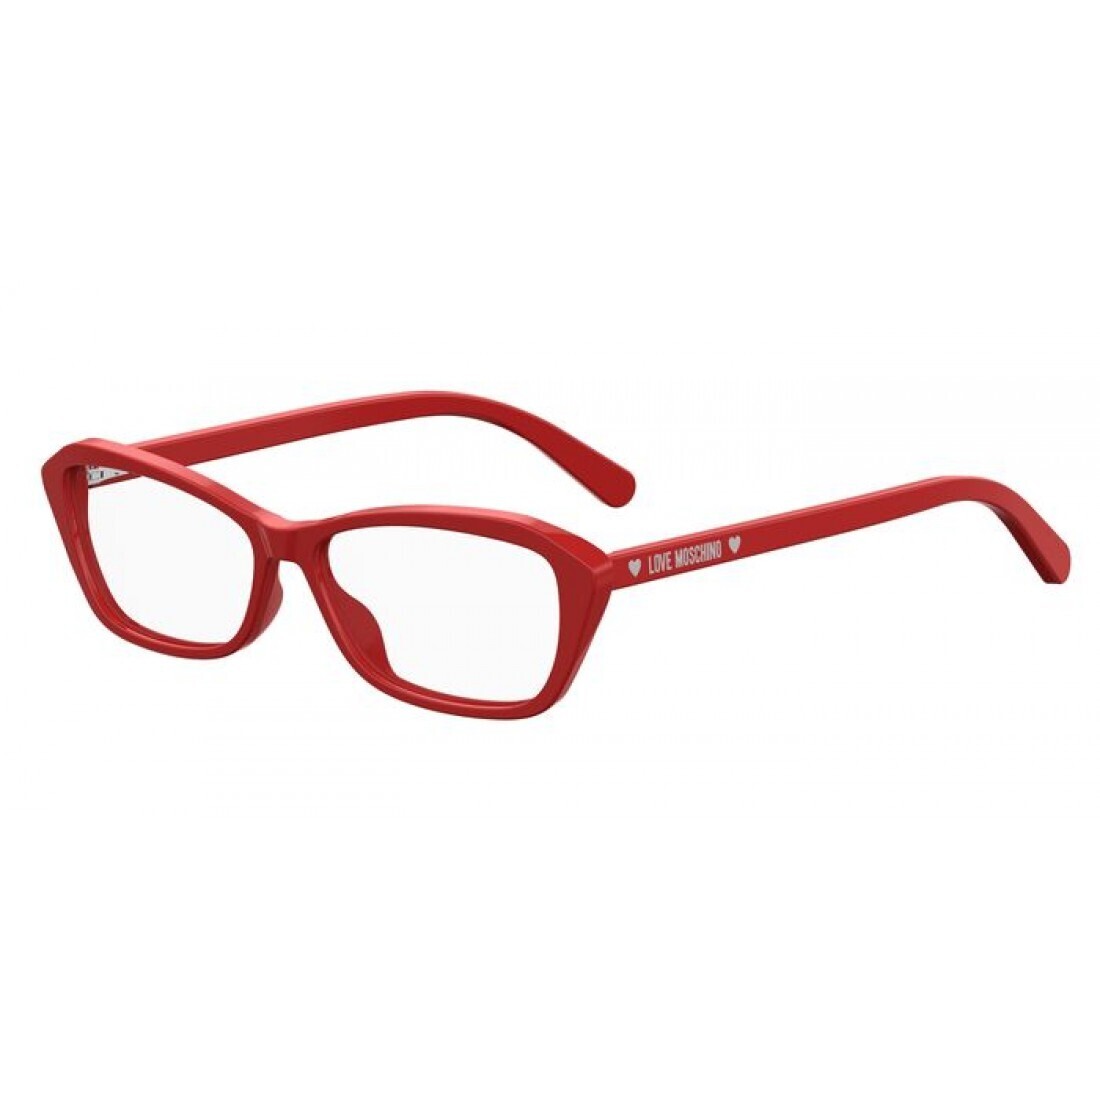 LOVE MOSCHINO 538 C9A red occhiali